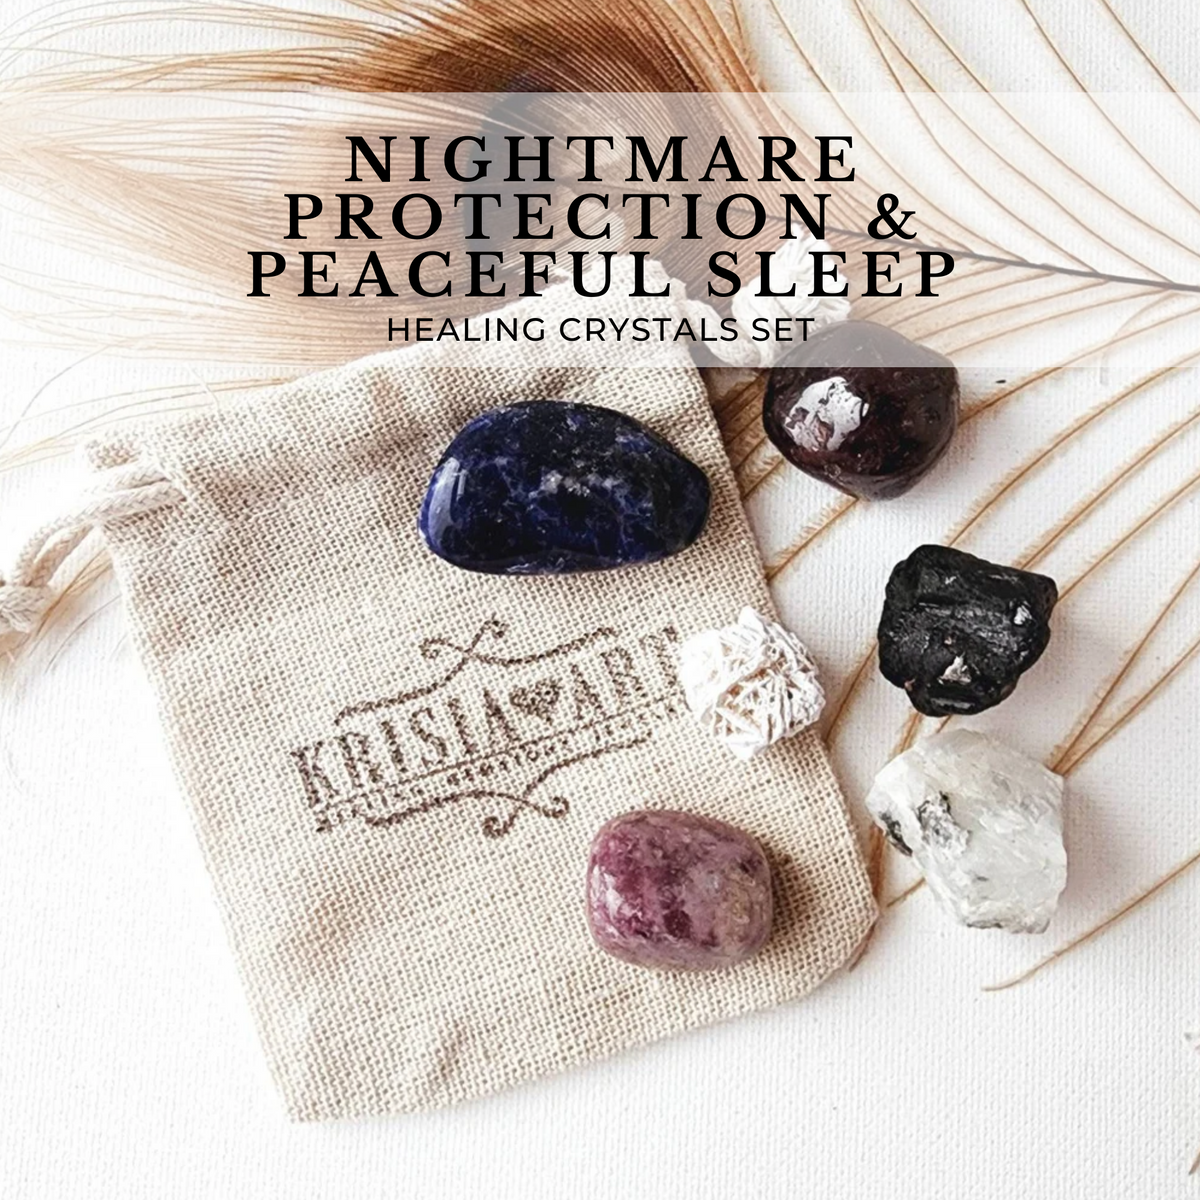 NIGHTMARES PROTECTION crystal set for peaceful sleep, calming, and good dreams. Lepidolite, Sodalite, Black Tourmaline, Desert Rose Selenite, Red Garnet, and Moonstone